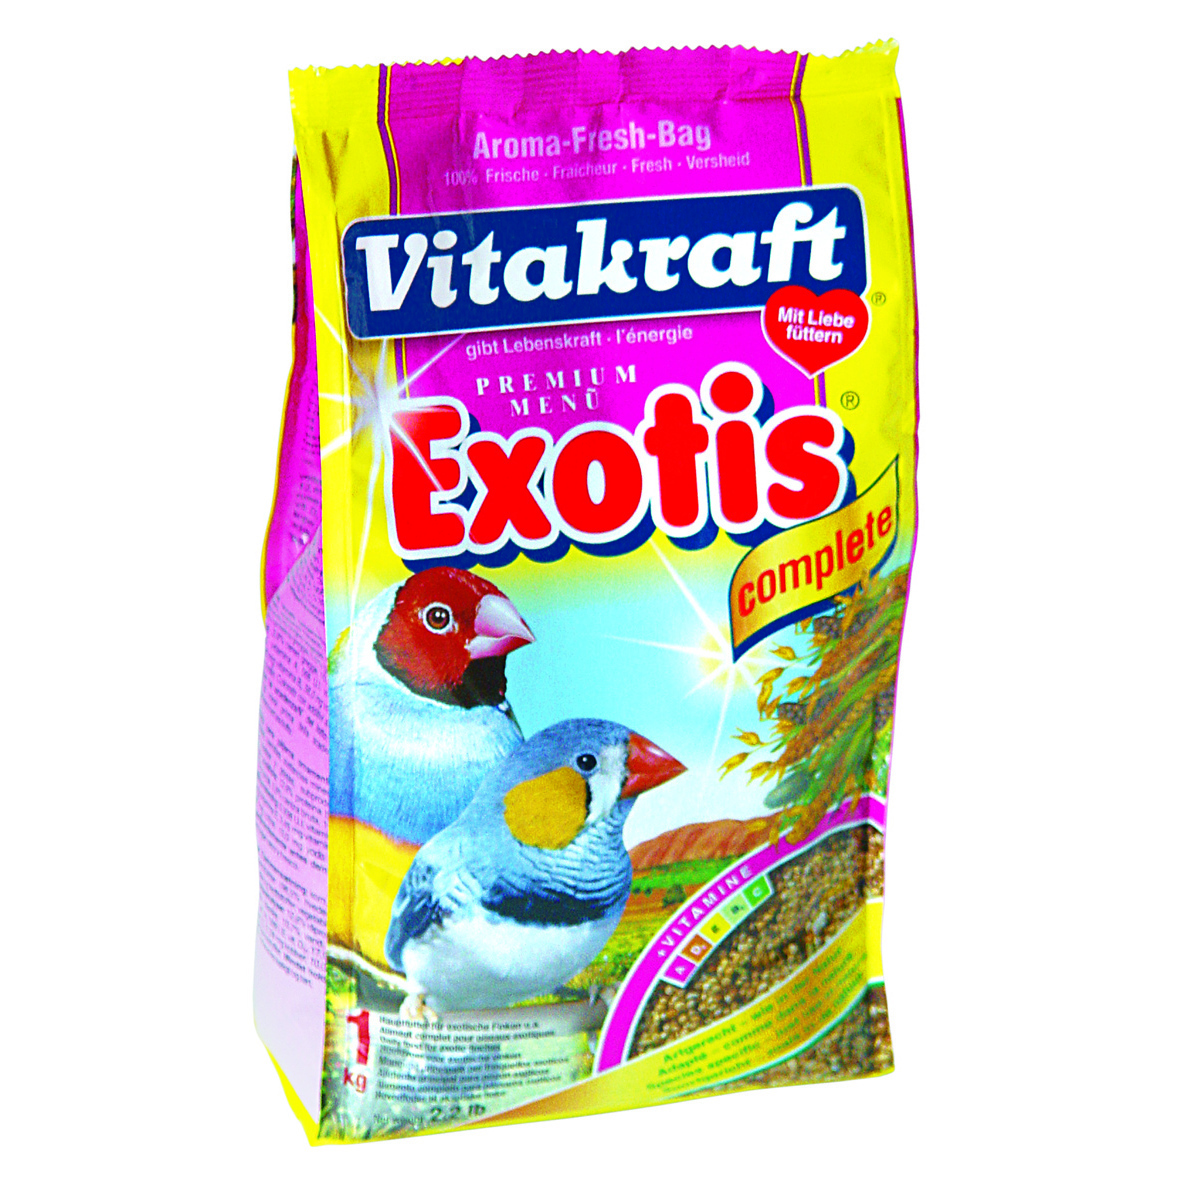 Vitakraft Exotis Premium Menü complete 1kg 3x1kg